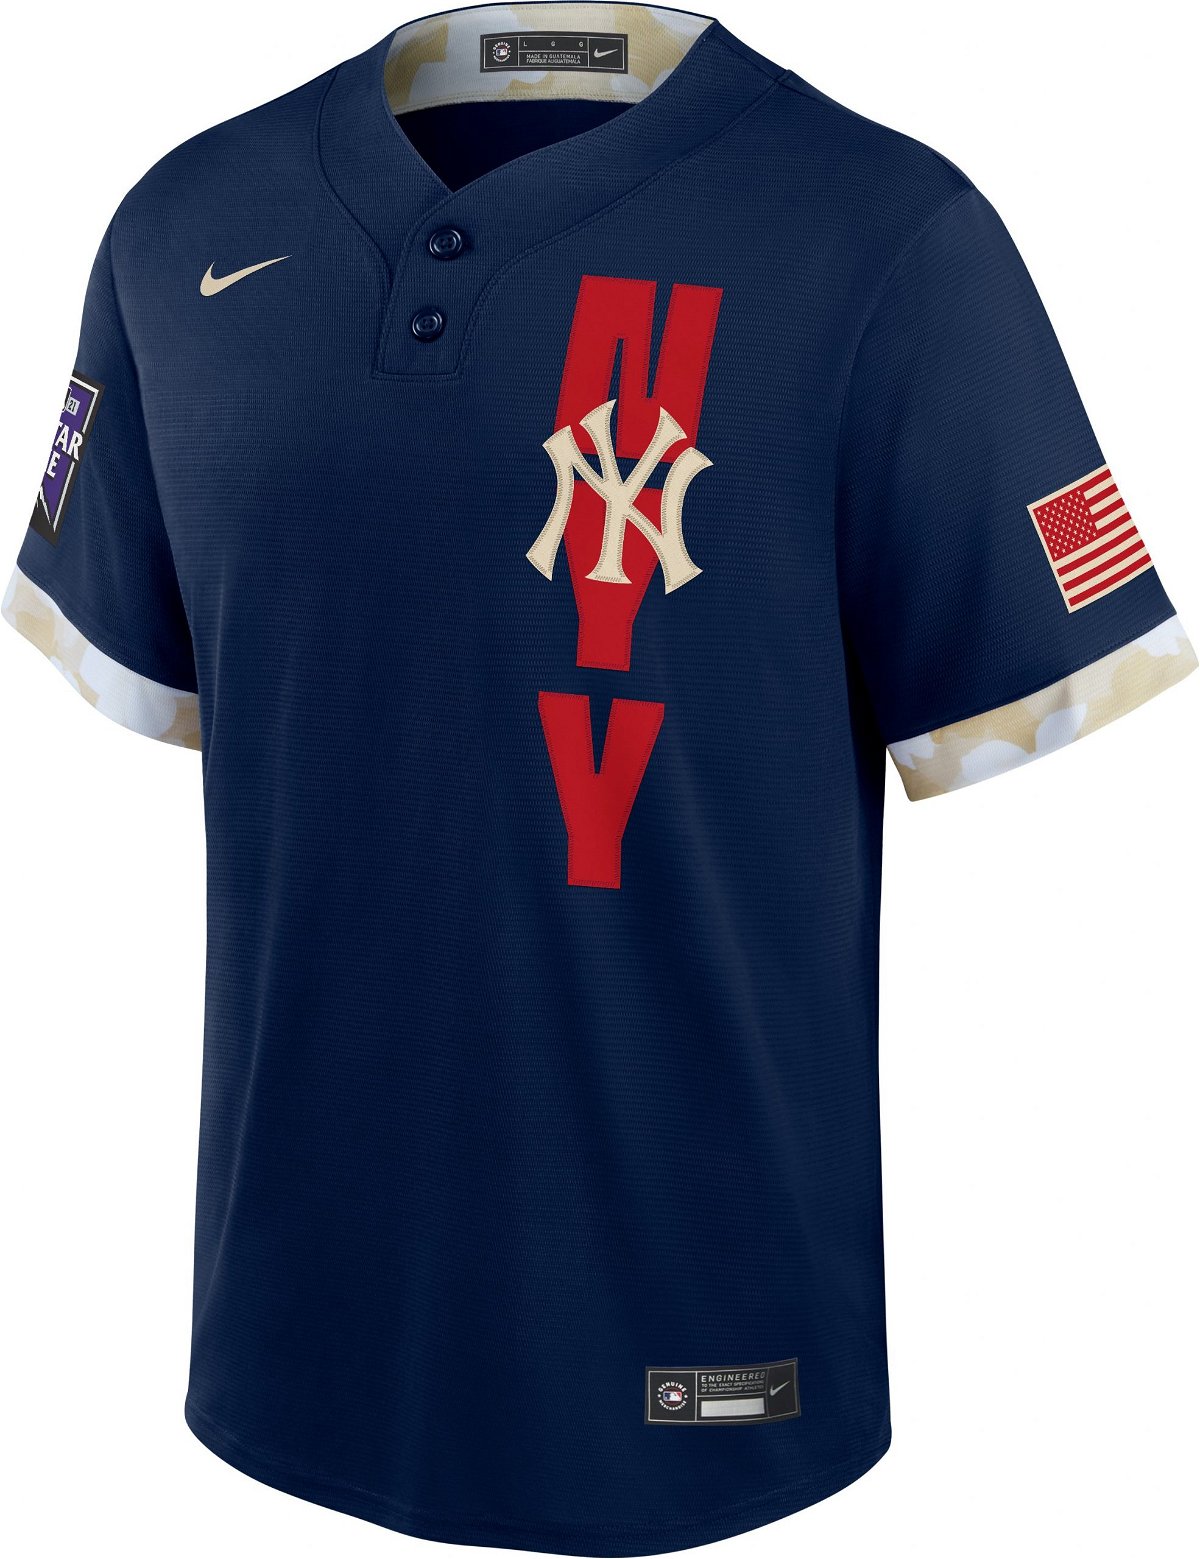 MLB unveils AllStar Game uniforms and caps KRDO